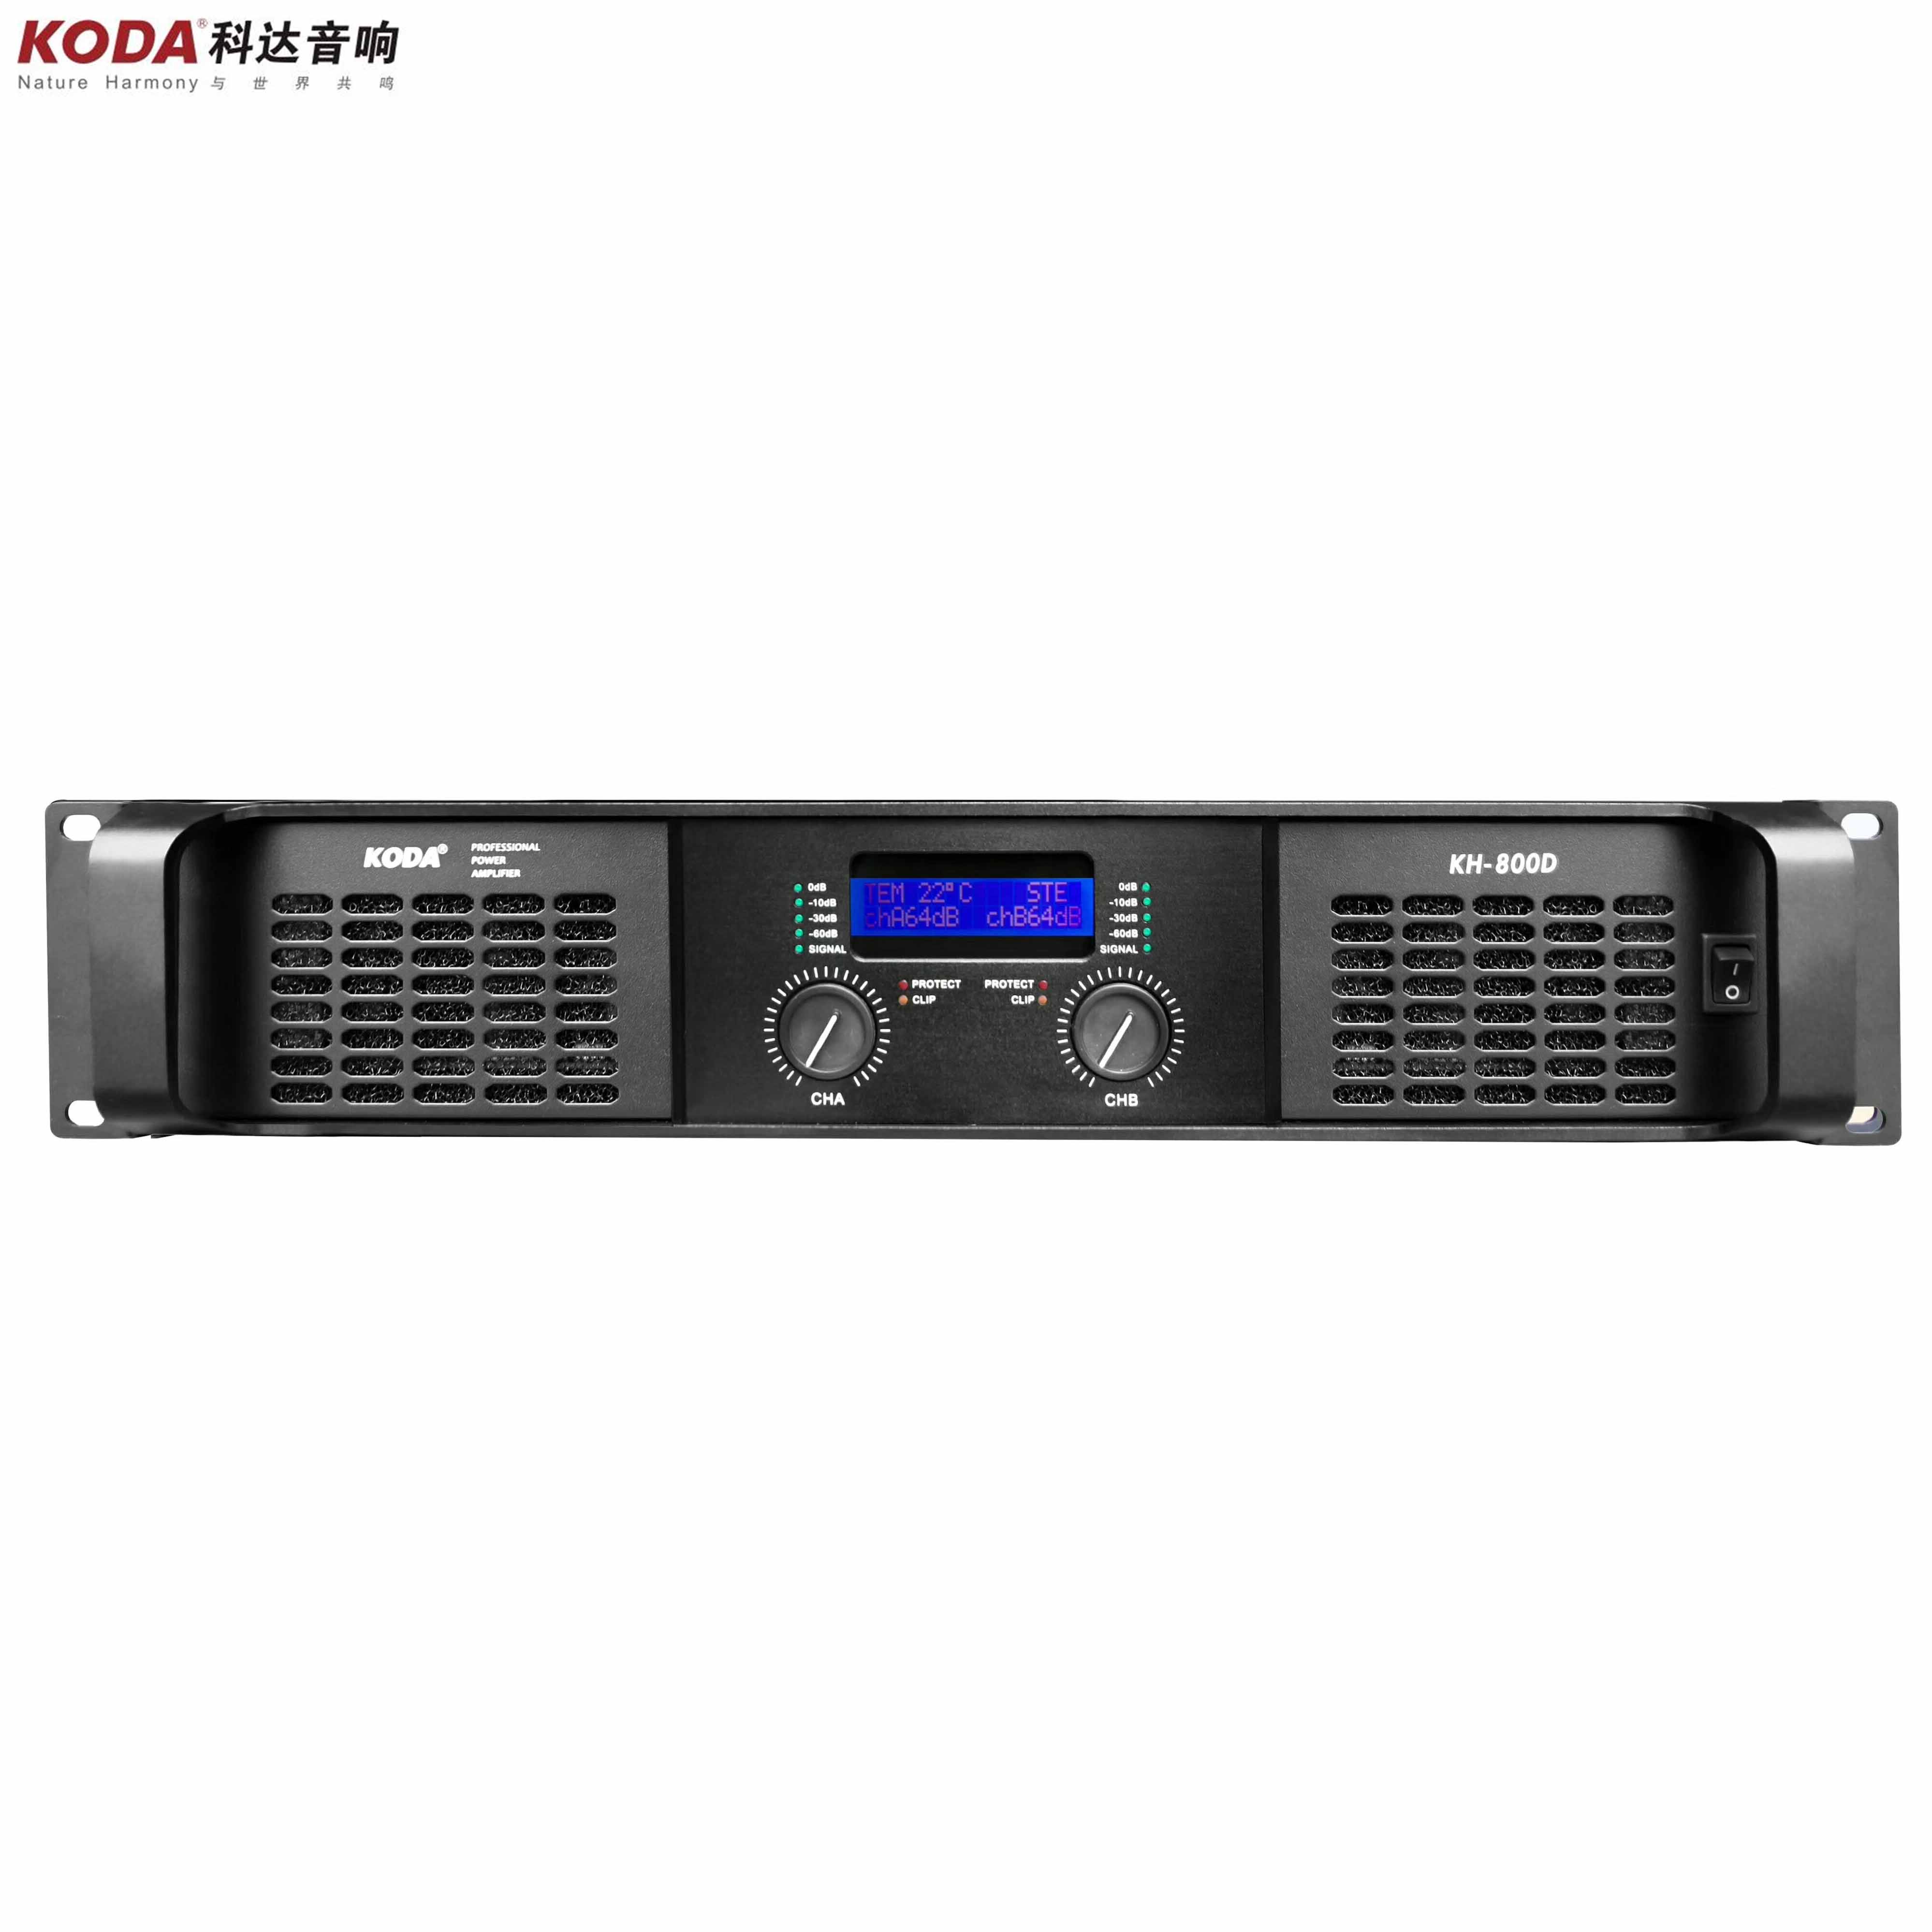 Amplifier KODA KH-1000D